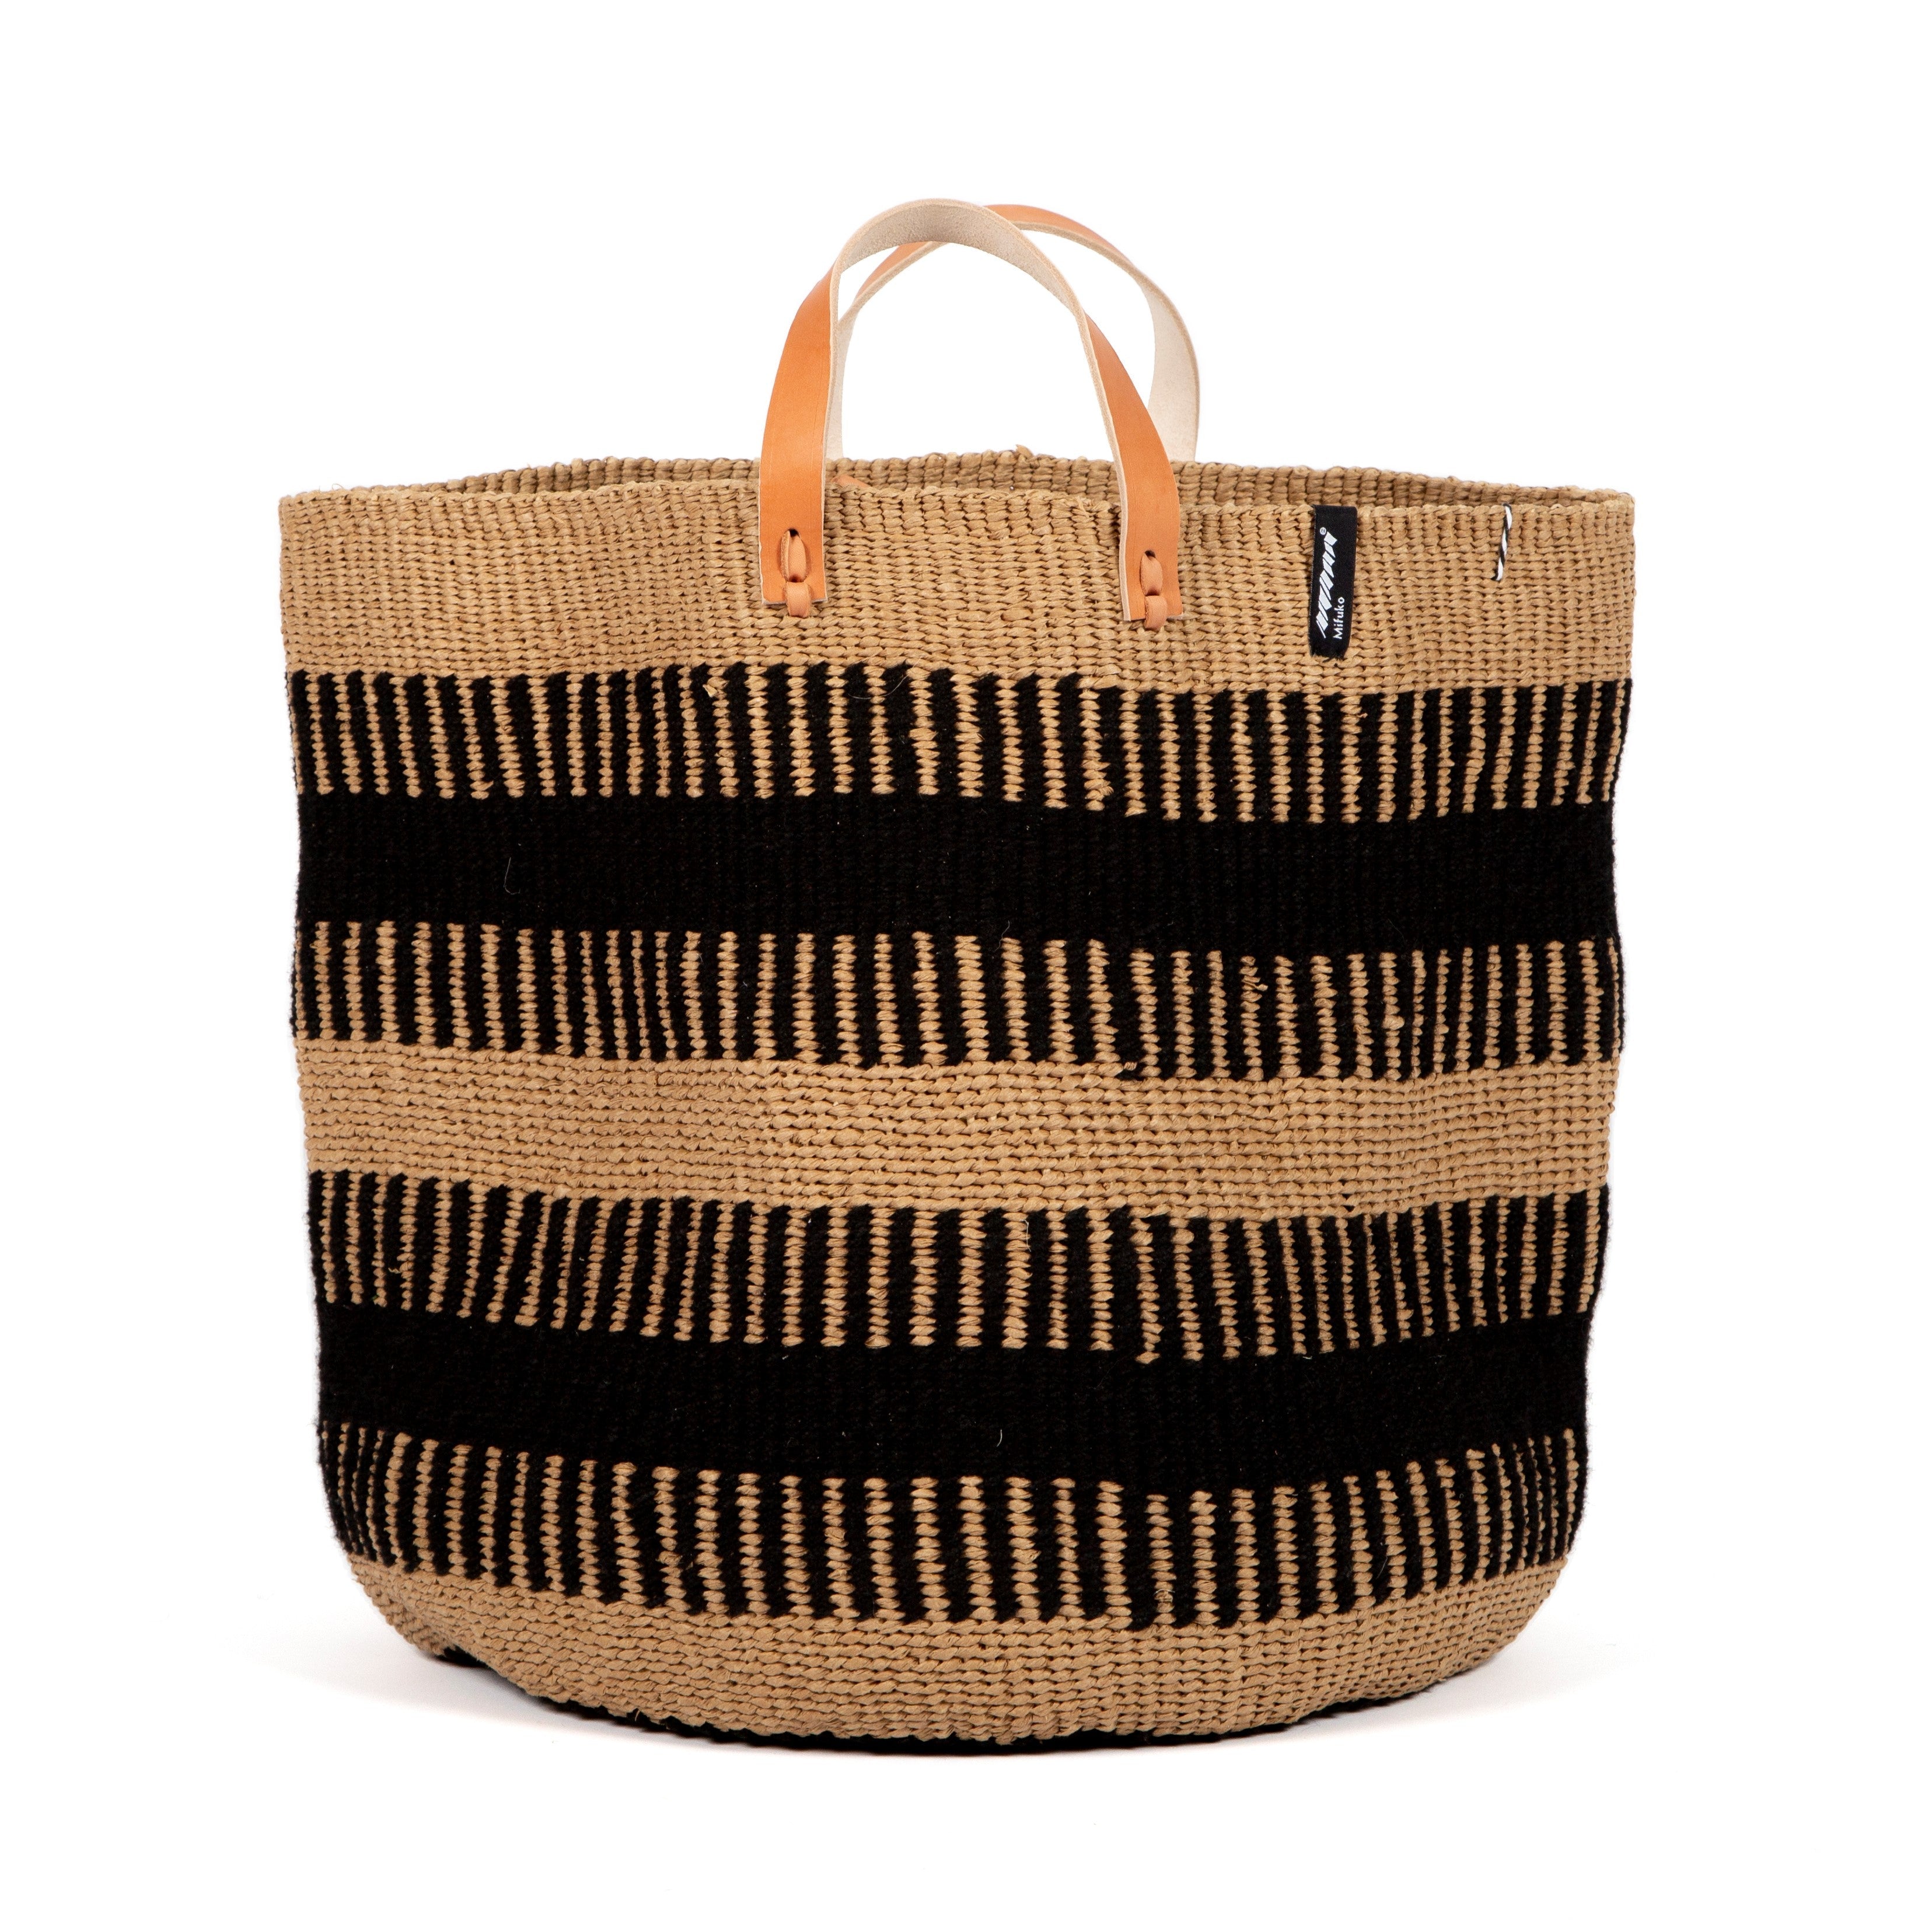 Pamba market basket | Black rib weave L